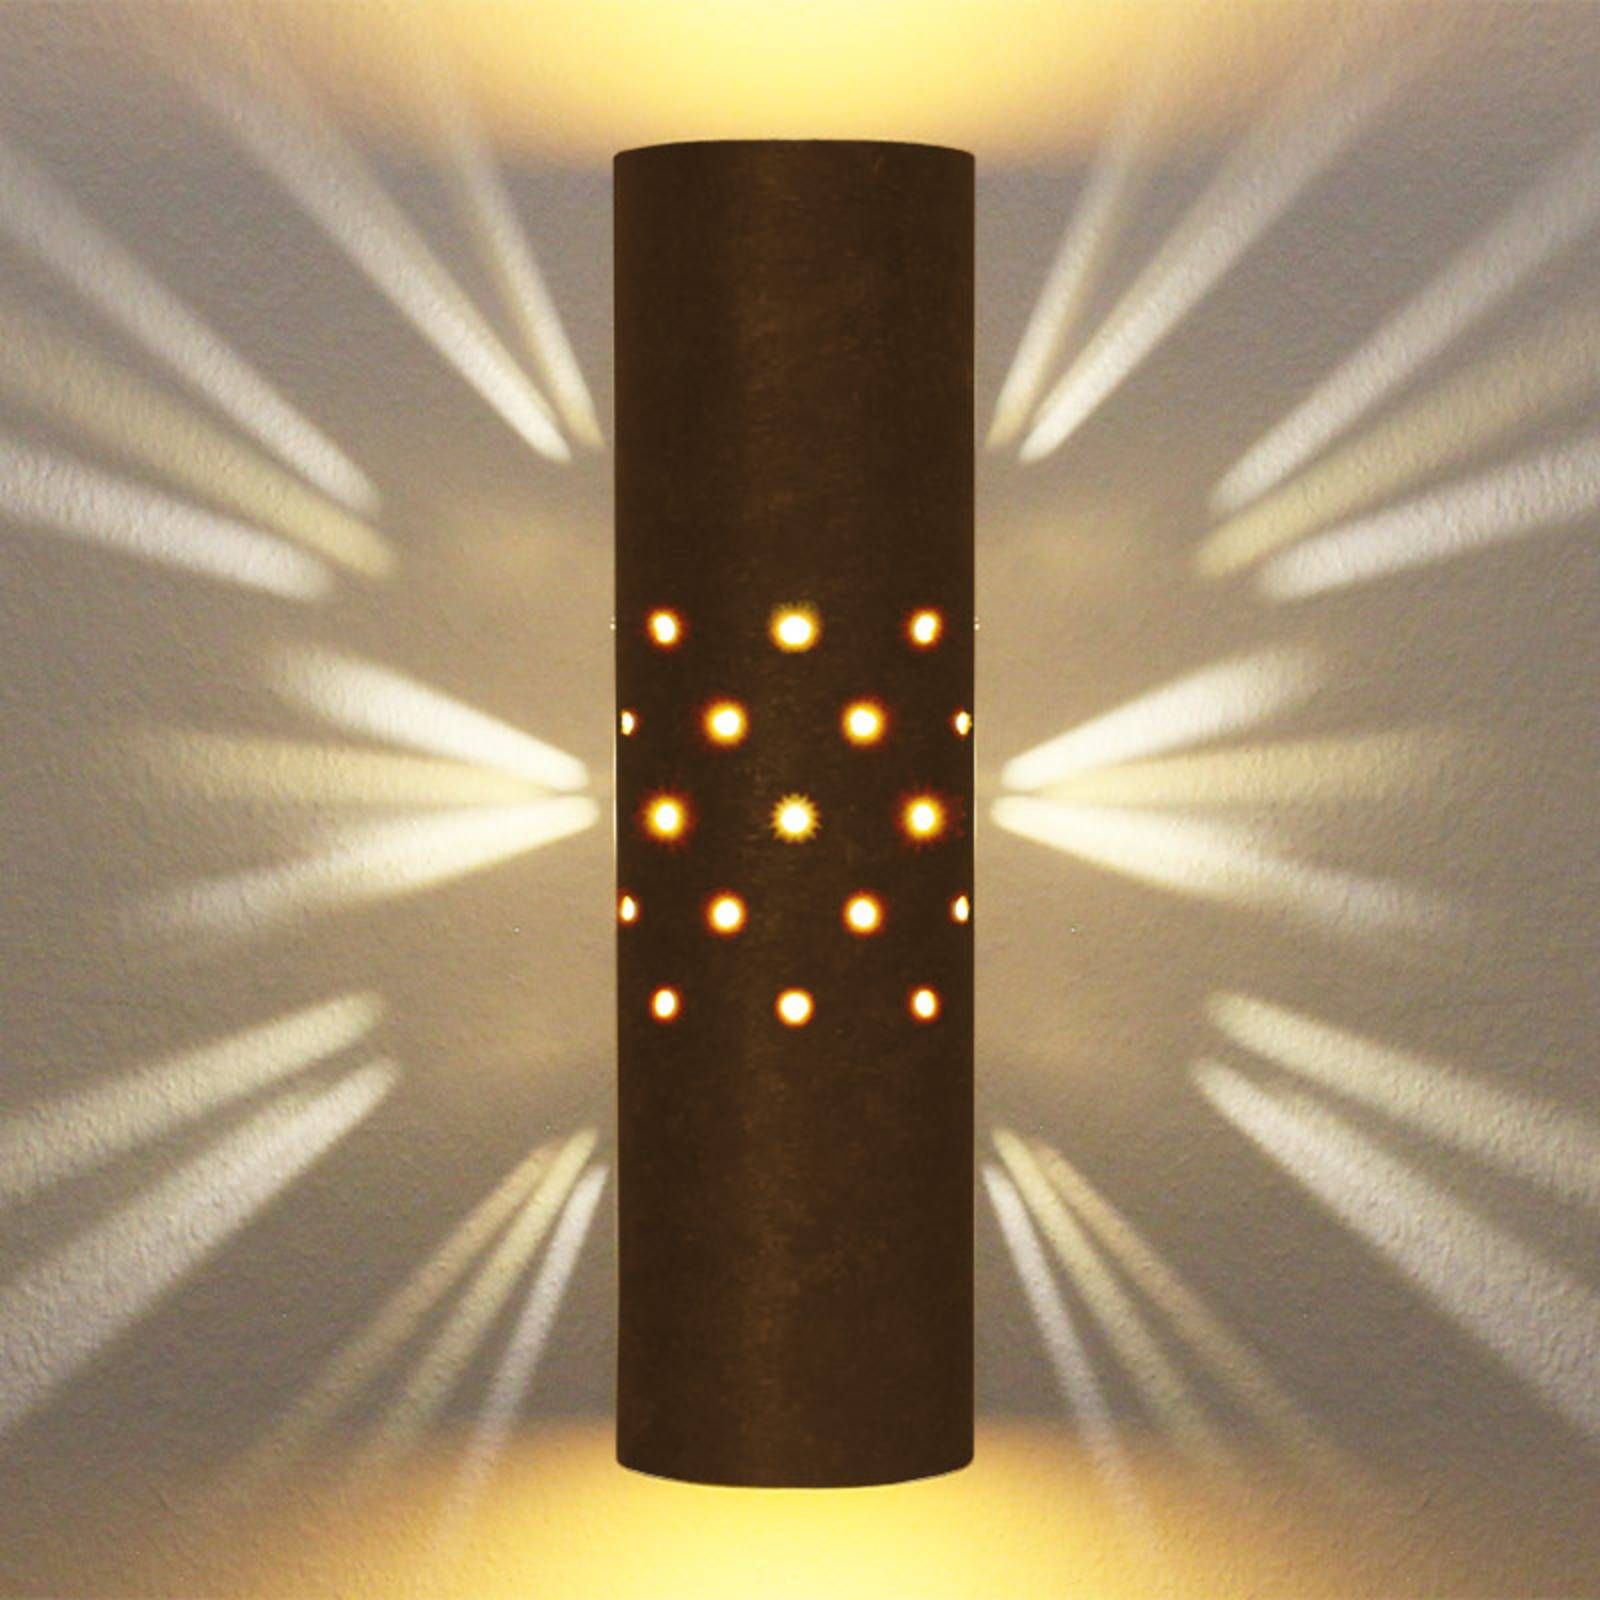 Menzel Solo nástenné svietidlo hnedo-čierne, Obývacia izba / jedáleň, železo, E27, 28W, L: 10 cm, K: 35cm